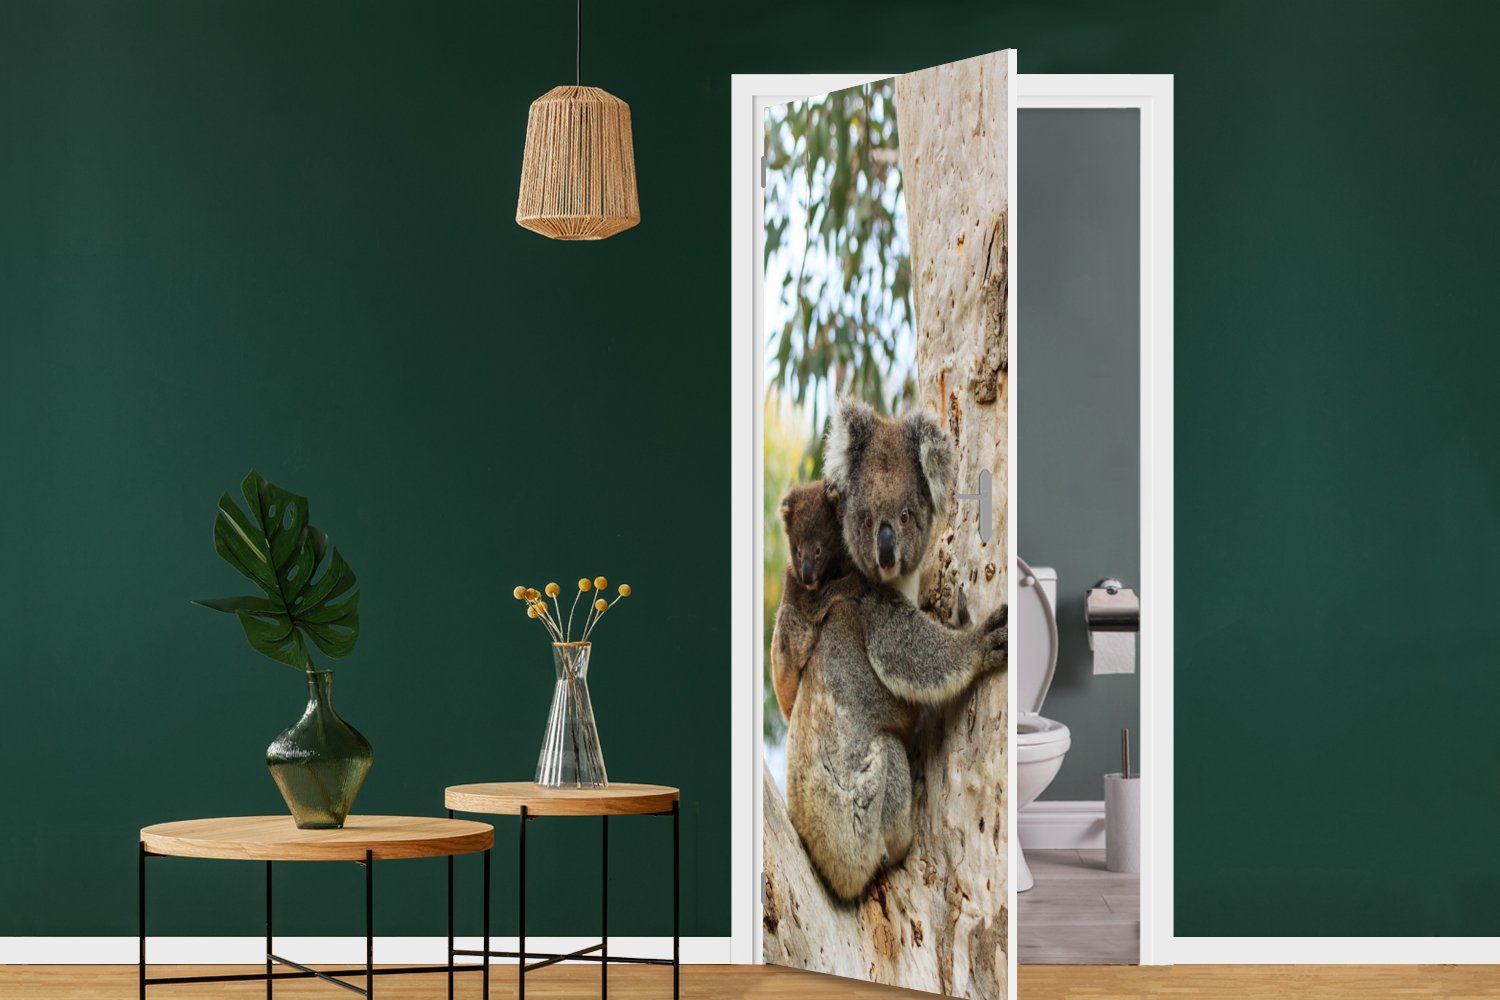 Türaufkleber, Koalas Baum Fototapete - Tür, für Matt, Türtapete bedruckt, cm St), Kind - Jungen 75x205 Mädchen, - - MuchoWow (1